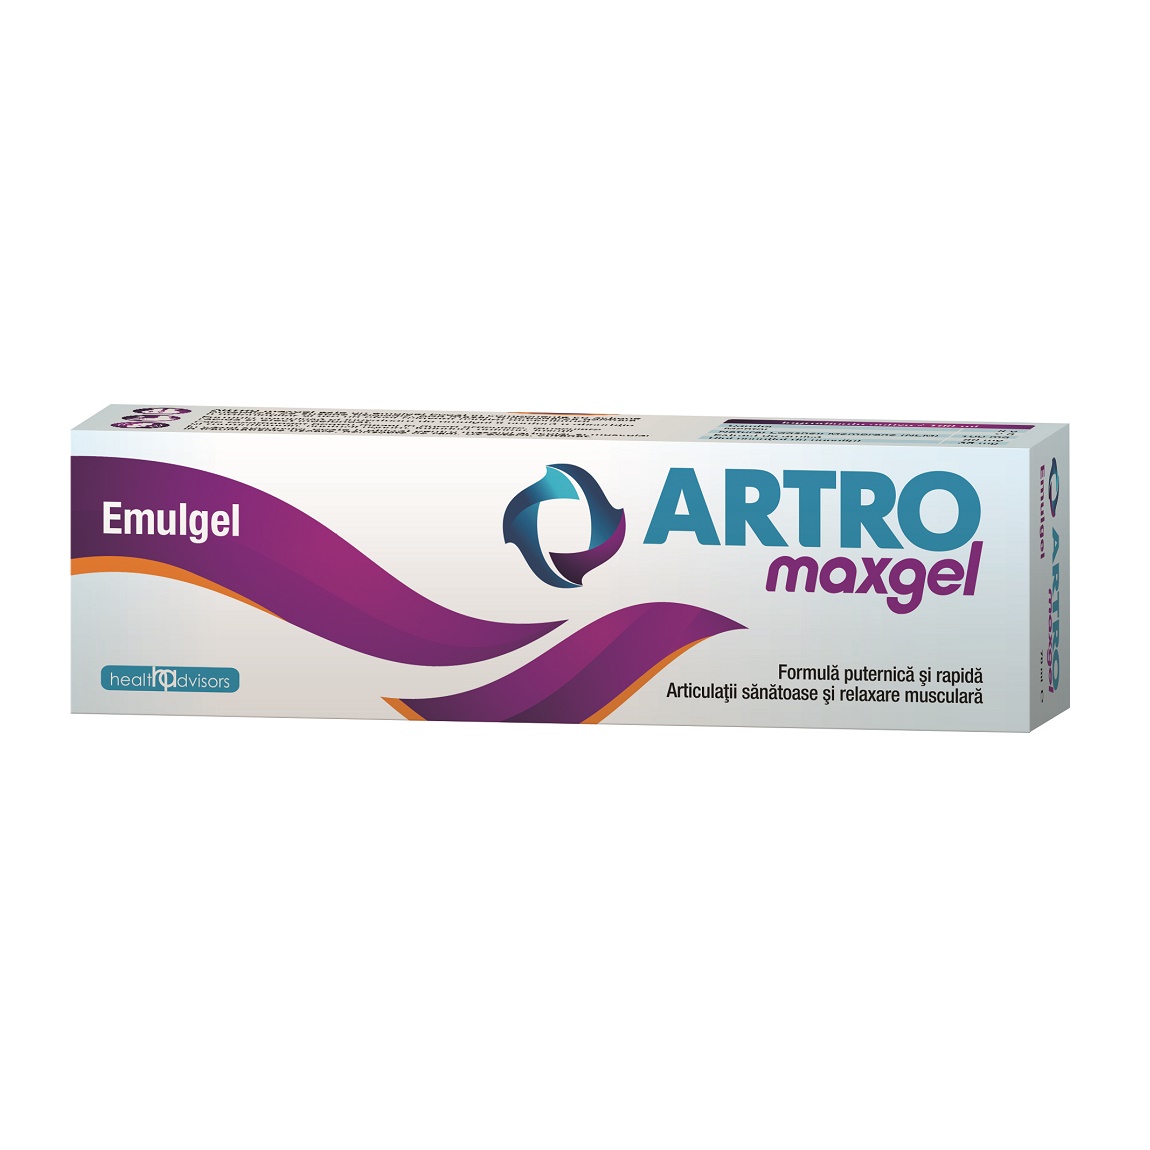 ArtroMaxgel emulgel, 70 ml, Health Advisors